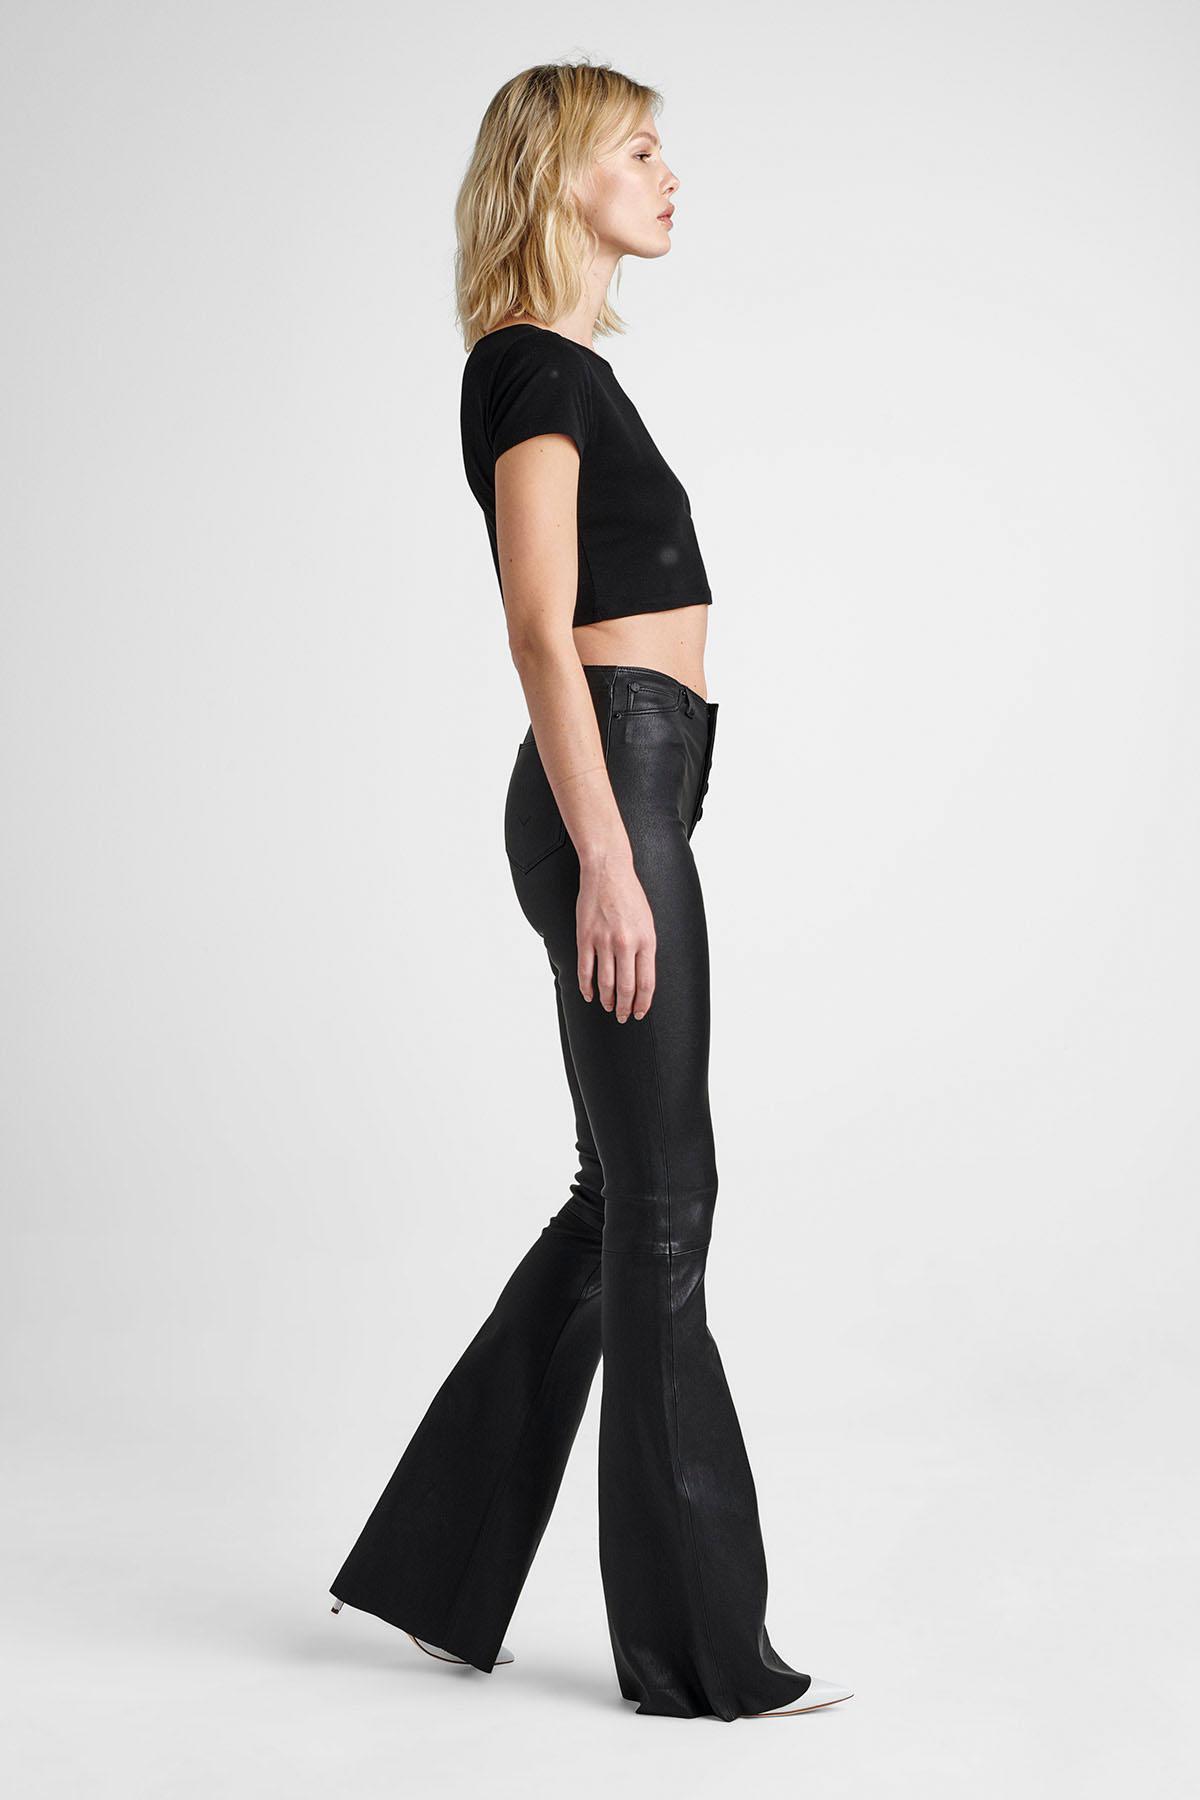 Hudson Jeans Jodi Leather Pants in Black - Lyst